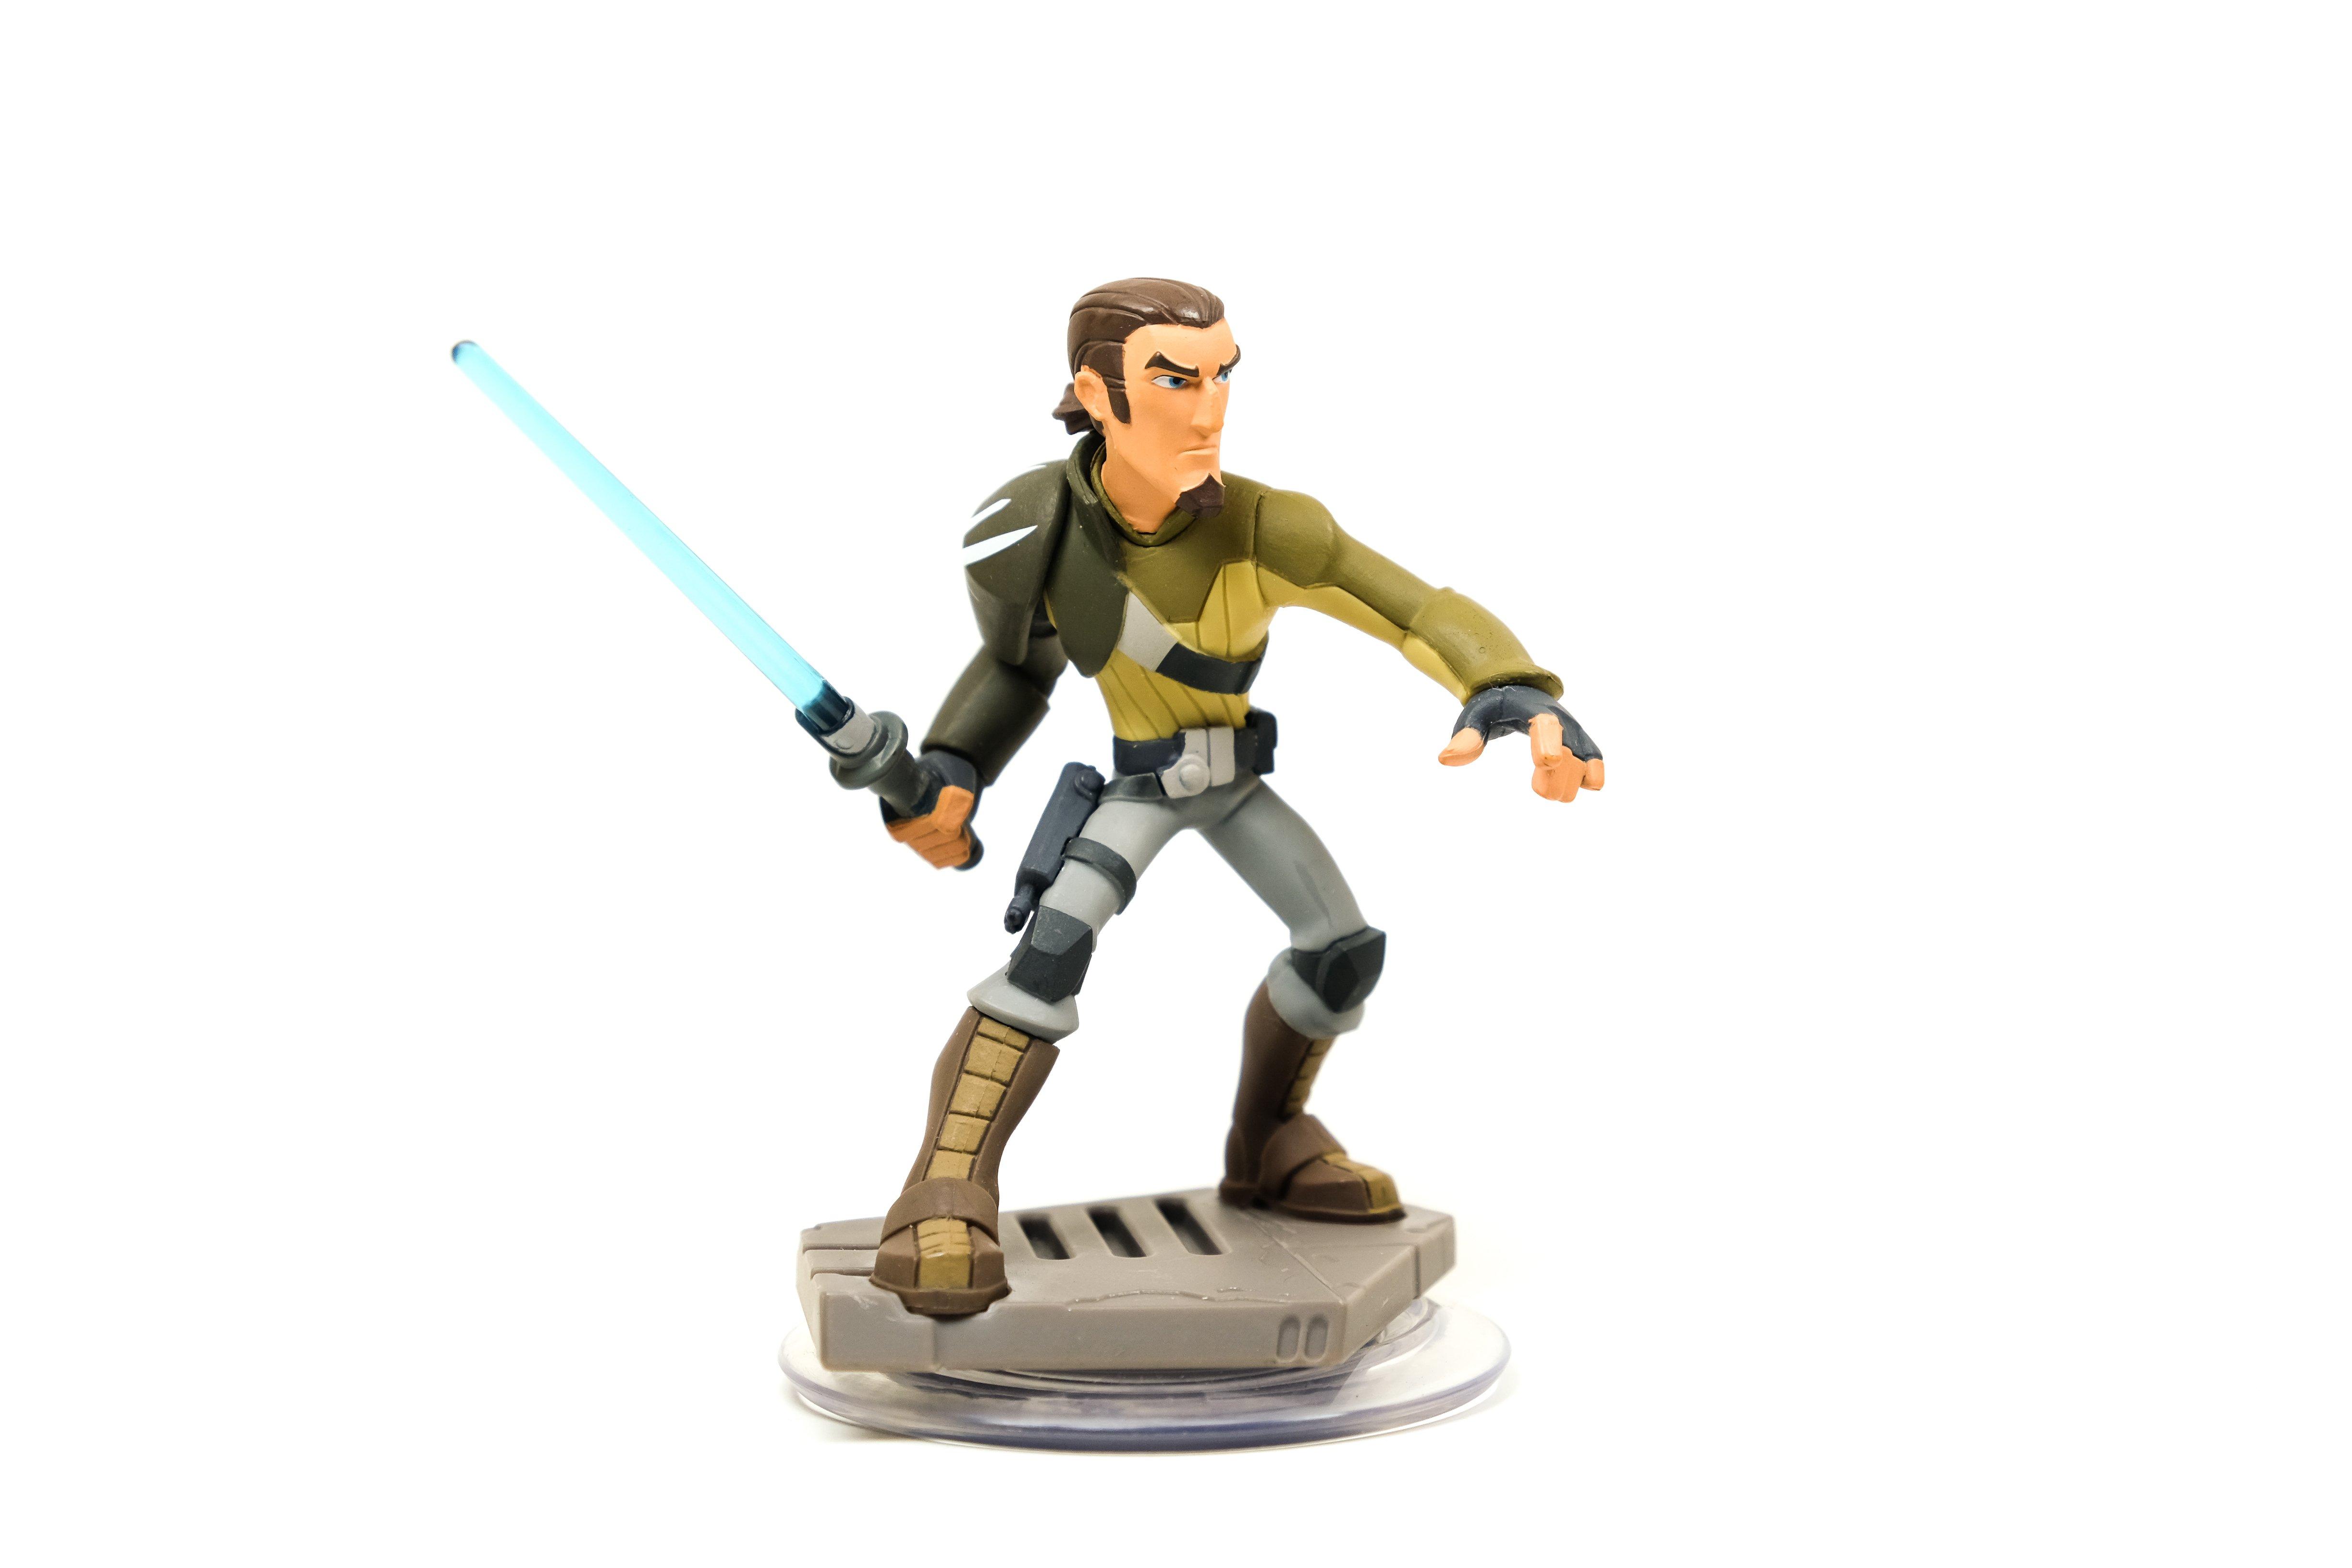 Disney INFINITY 3.0 Edition Star Wars Rebels Kanan Jarrus Figure